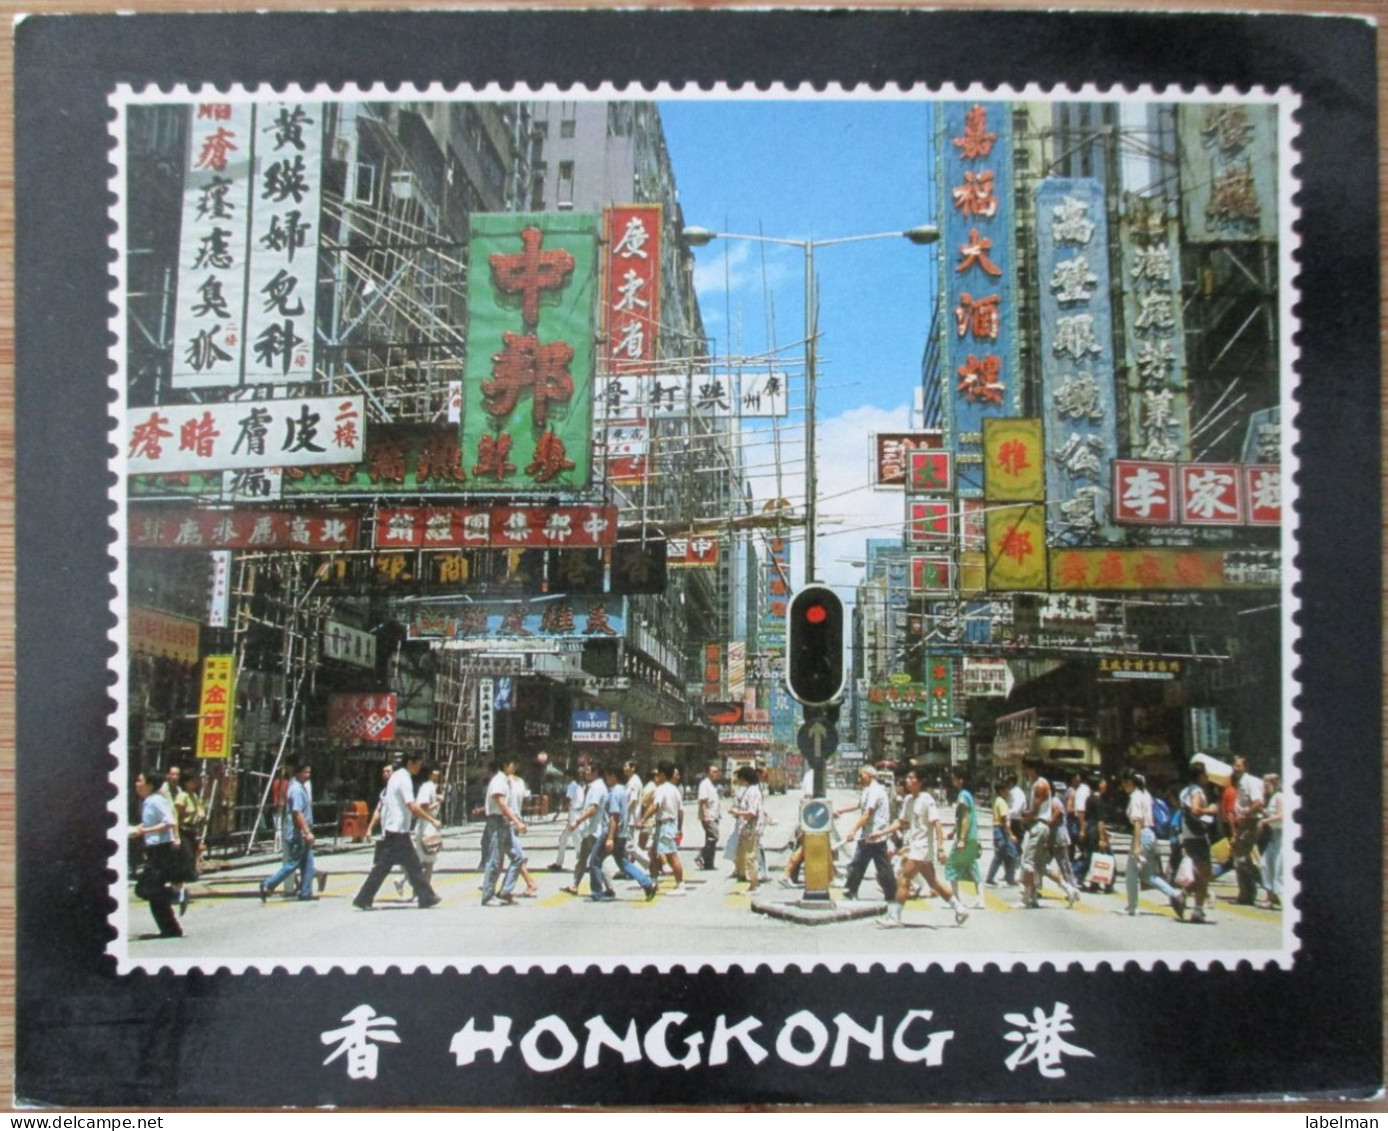 CHINA PEOPLES REPUBLIC HONG KONG MONKOK KOWLOON CARD POSTCARD ANSICHTSKARTE CARTOLINA CARD POSTKARTE CARTE POSTALE - Chine